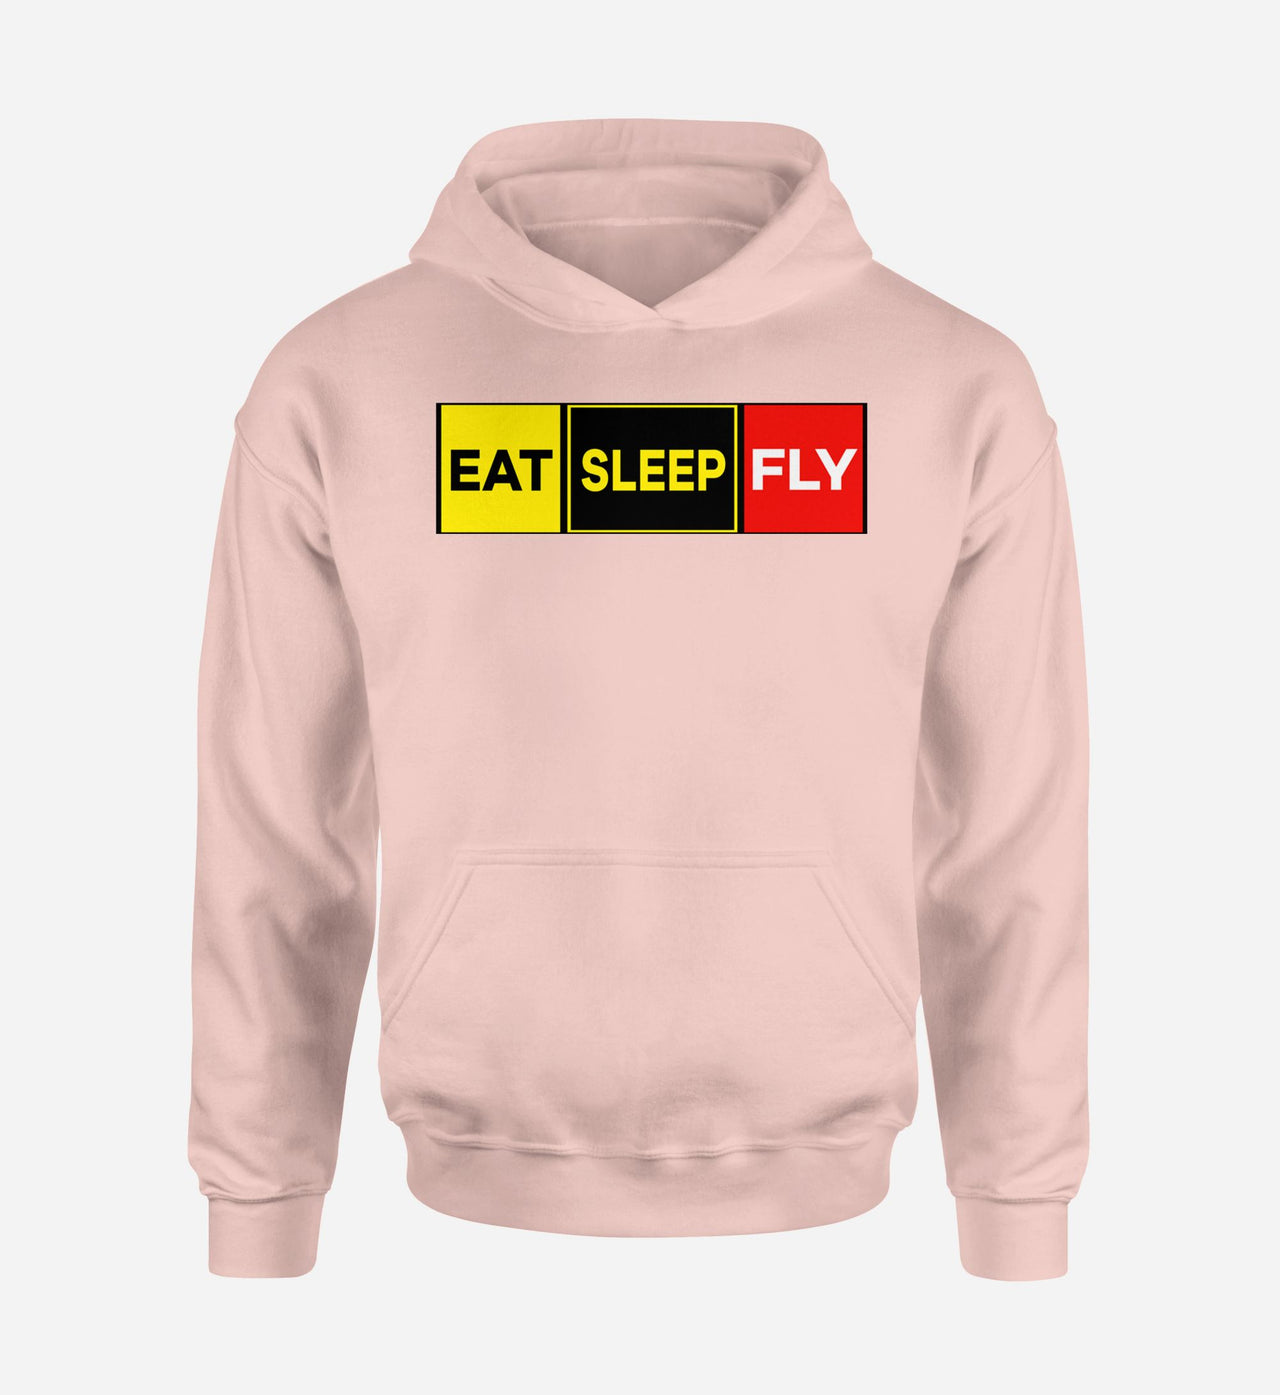 Eat Sleep Fly (Colourful) Designed Hoodies